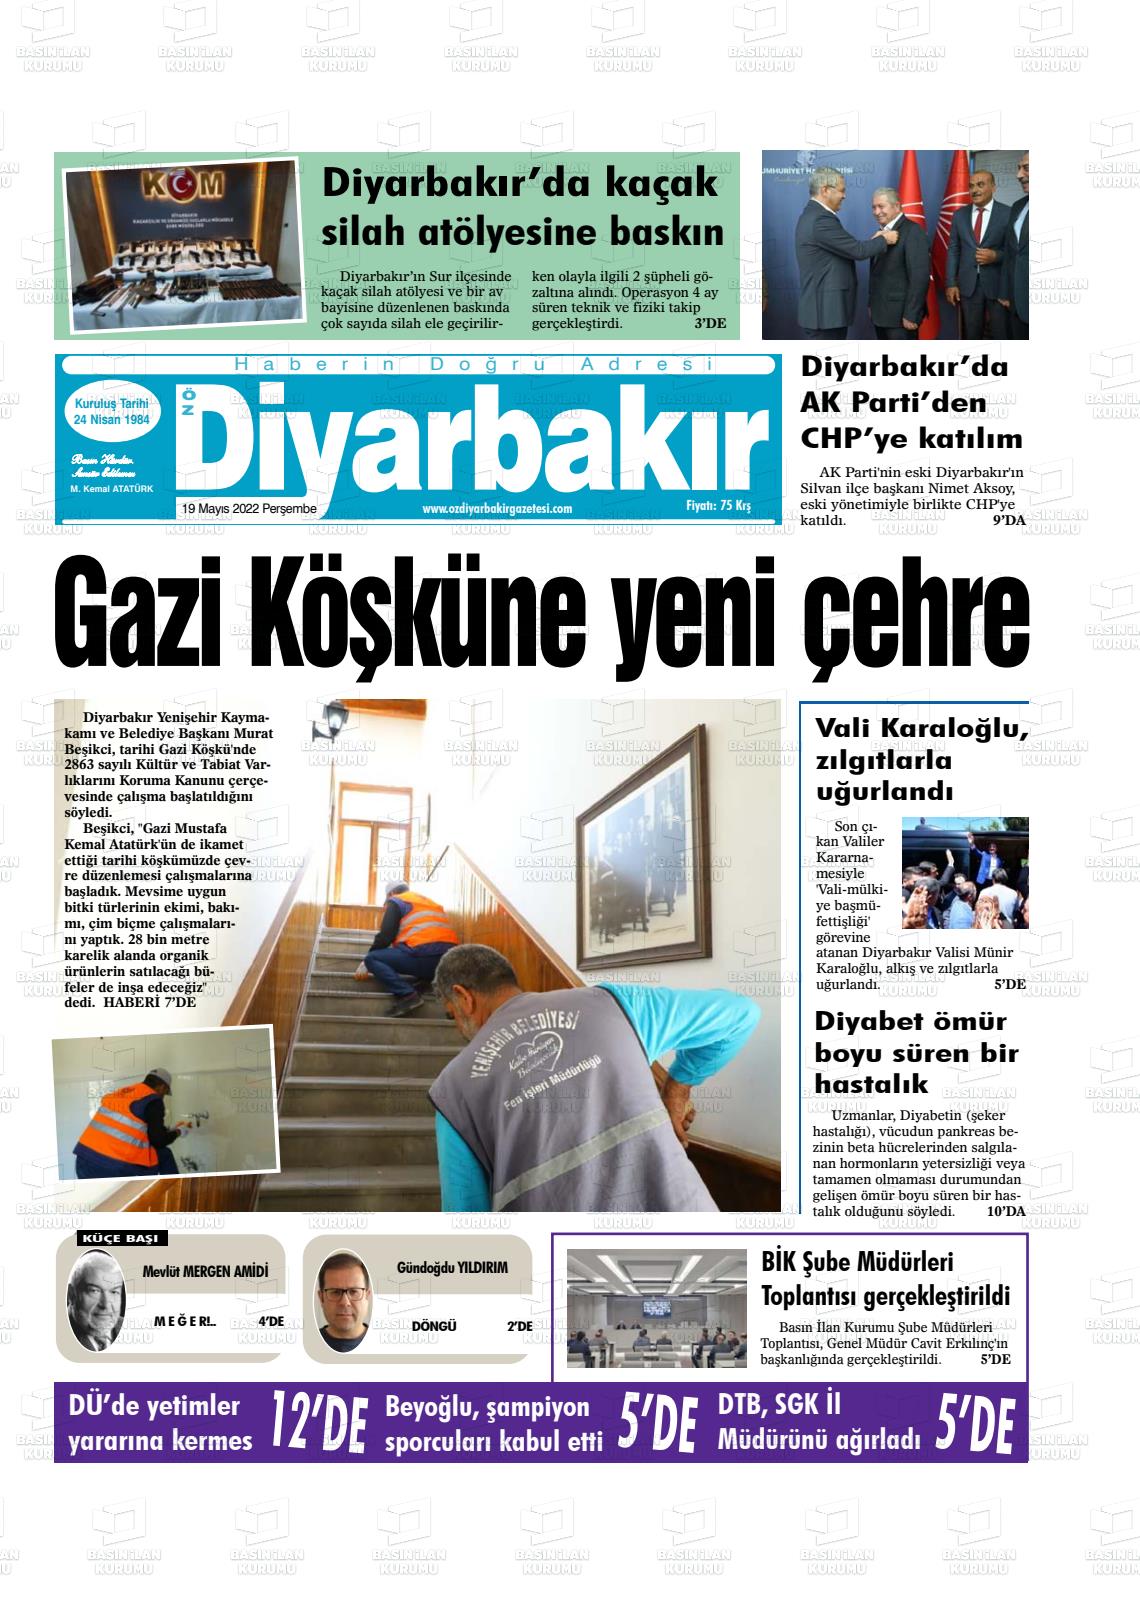 19 Mayıs 2022 Öz Diyarbakir Gazete Gazete Manşeti